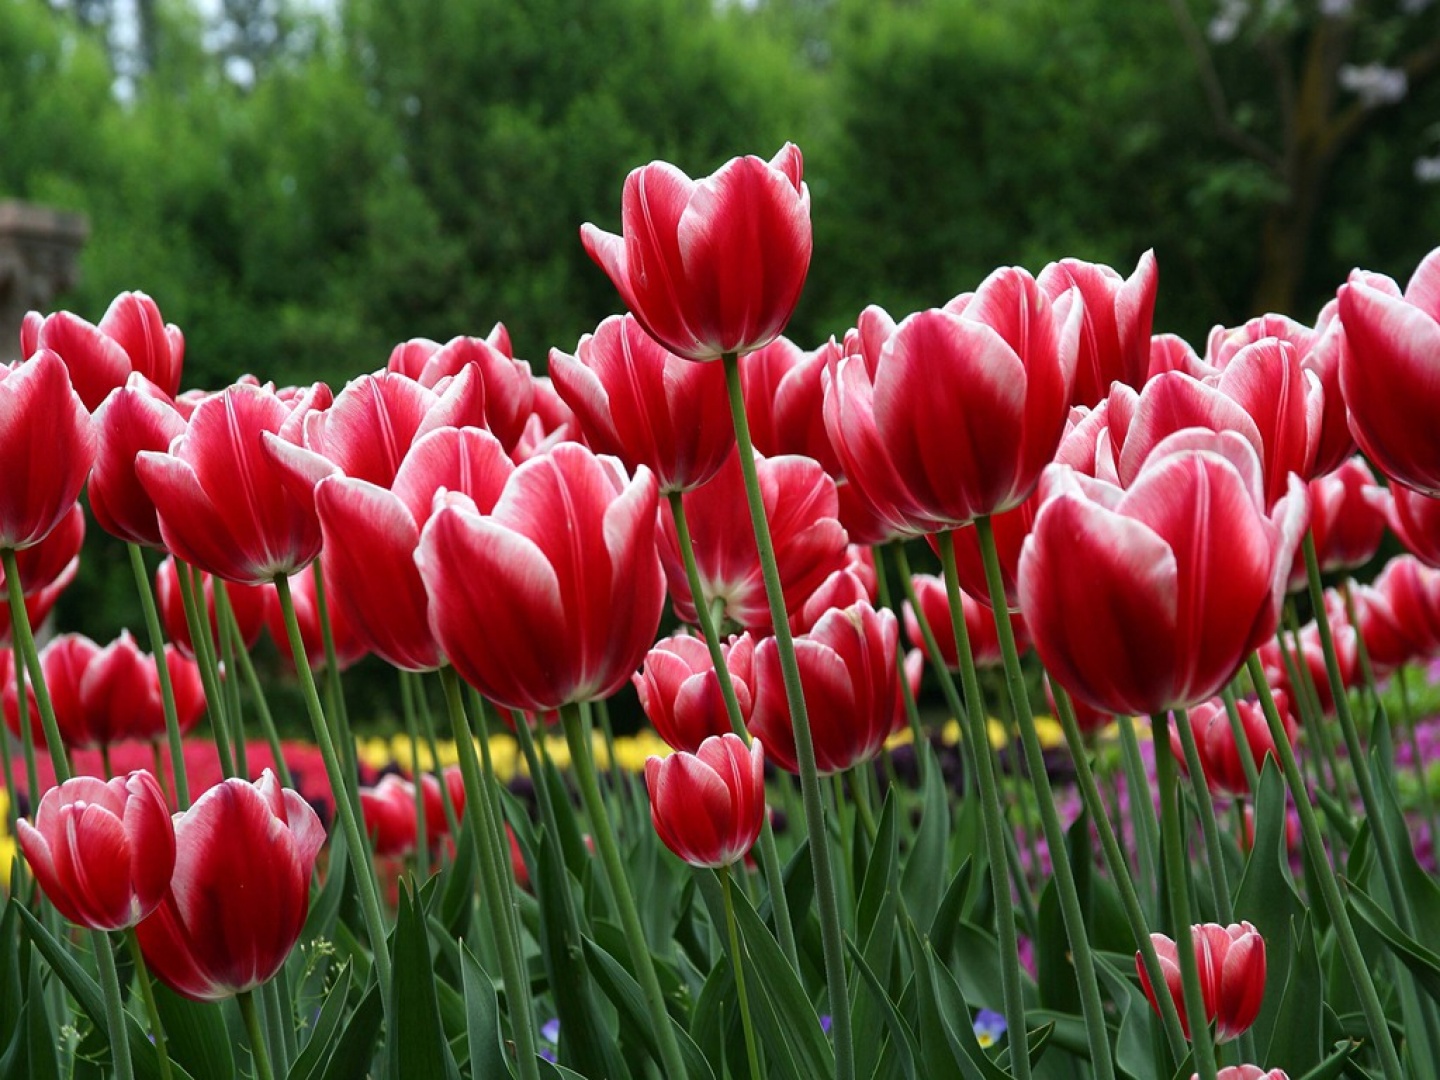 Flores wallpapers - Fondos de pantallas de Flores: Fondos de Tulipanes